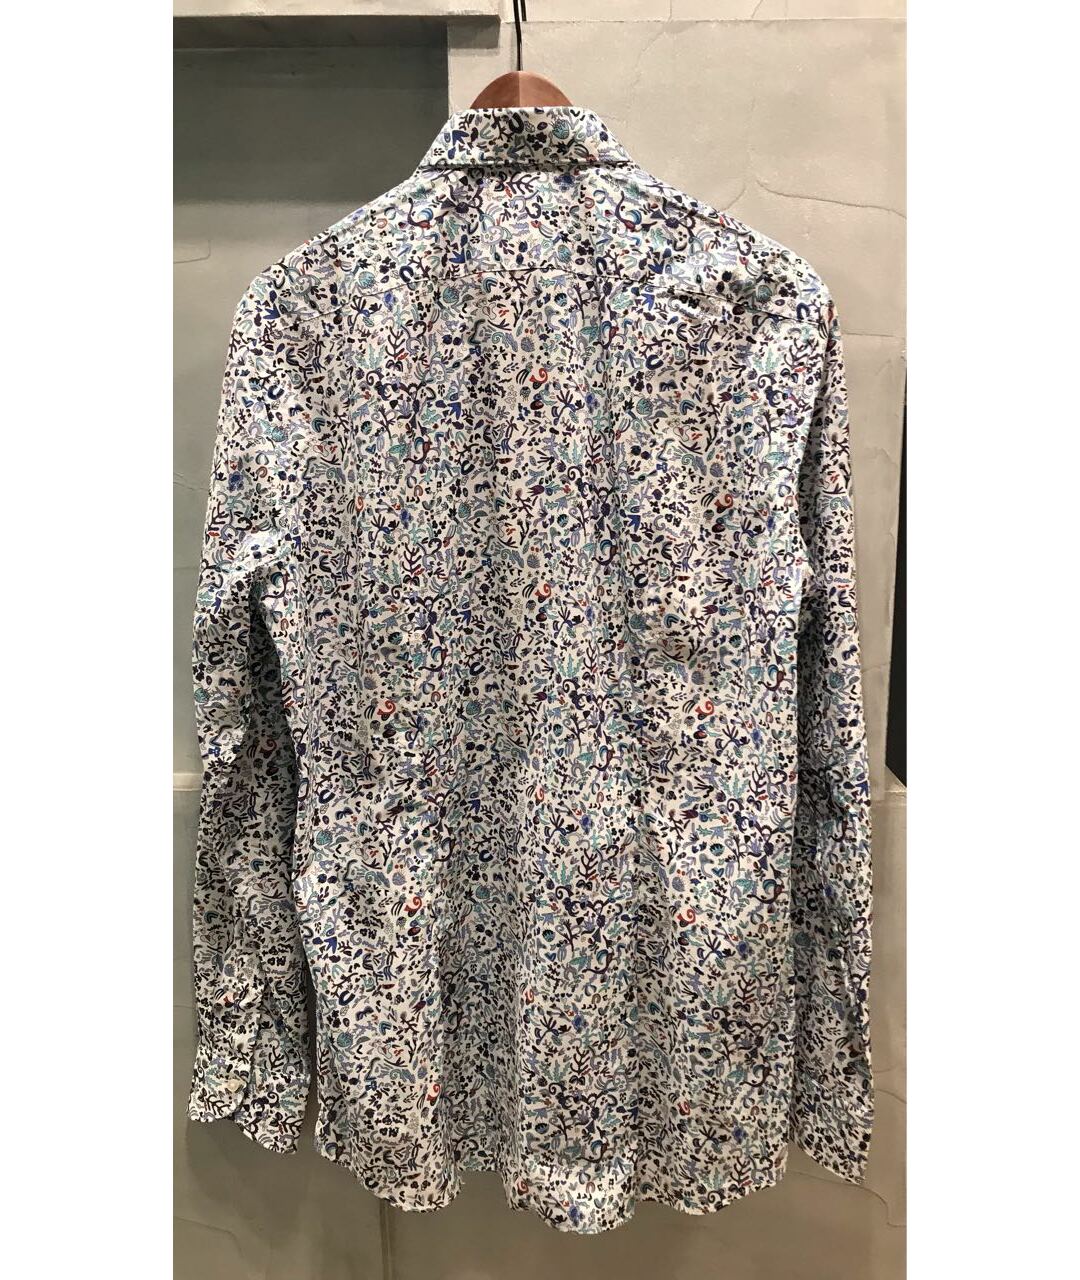 XACUS Мульти хлопковая кэжуал рубашка, фото 3